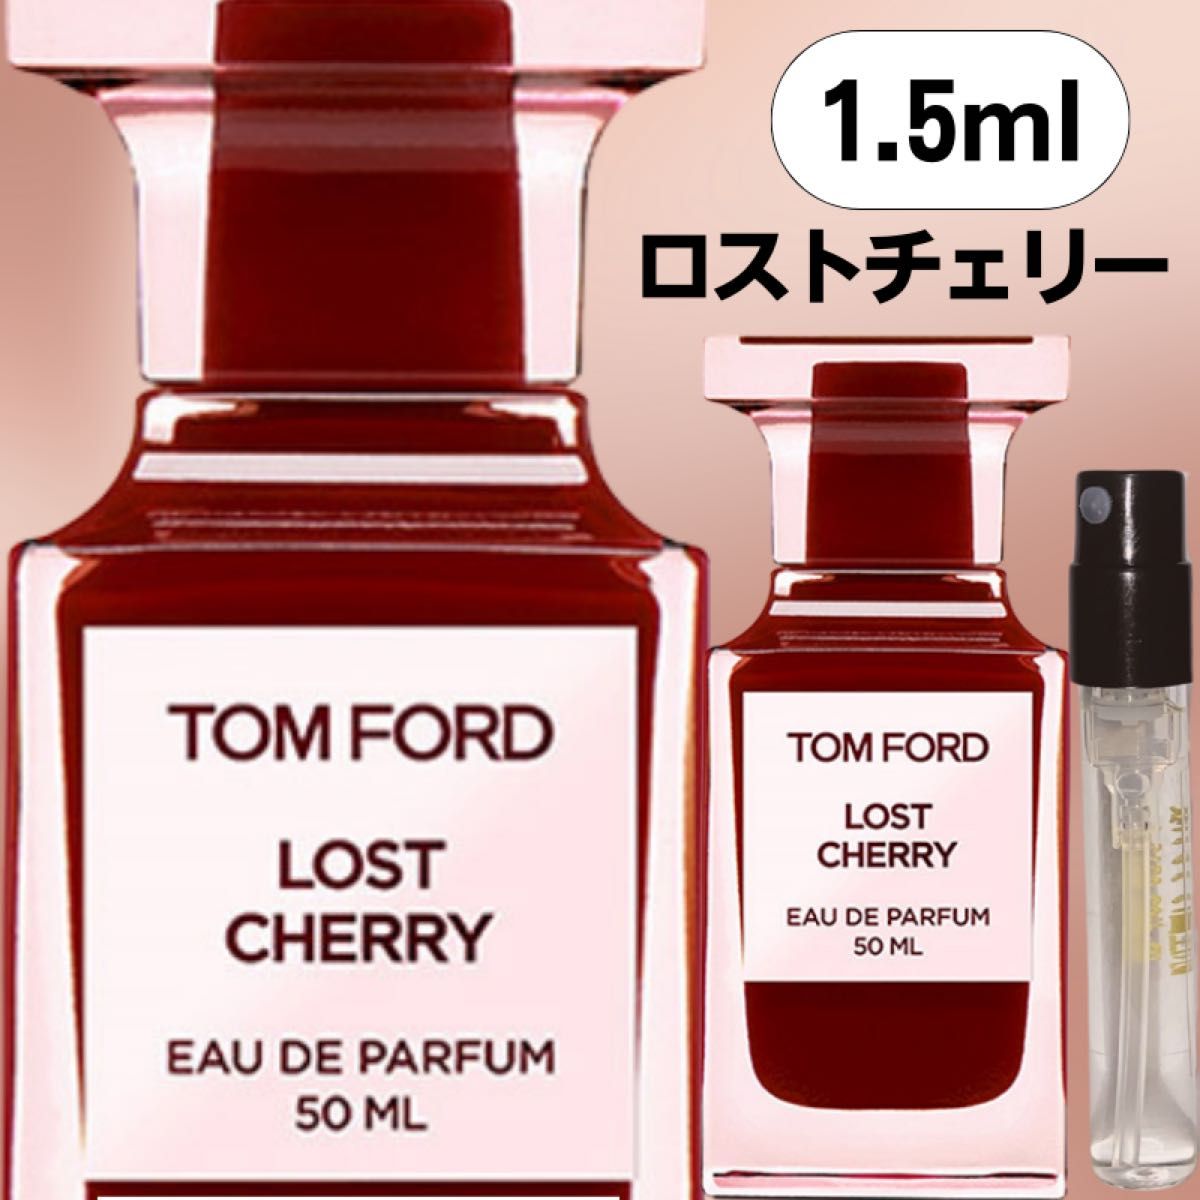 【1.5ml】ロストチェリー トムフォード 新品 お試し ミニ香水 TOM FORD サンプル